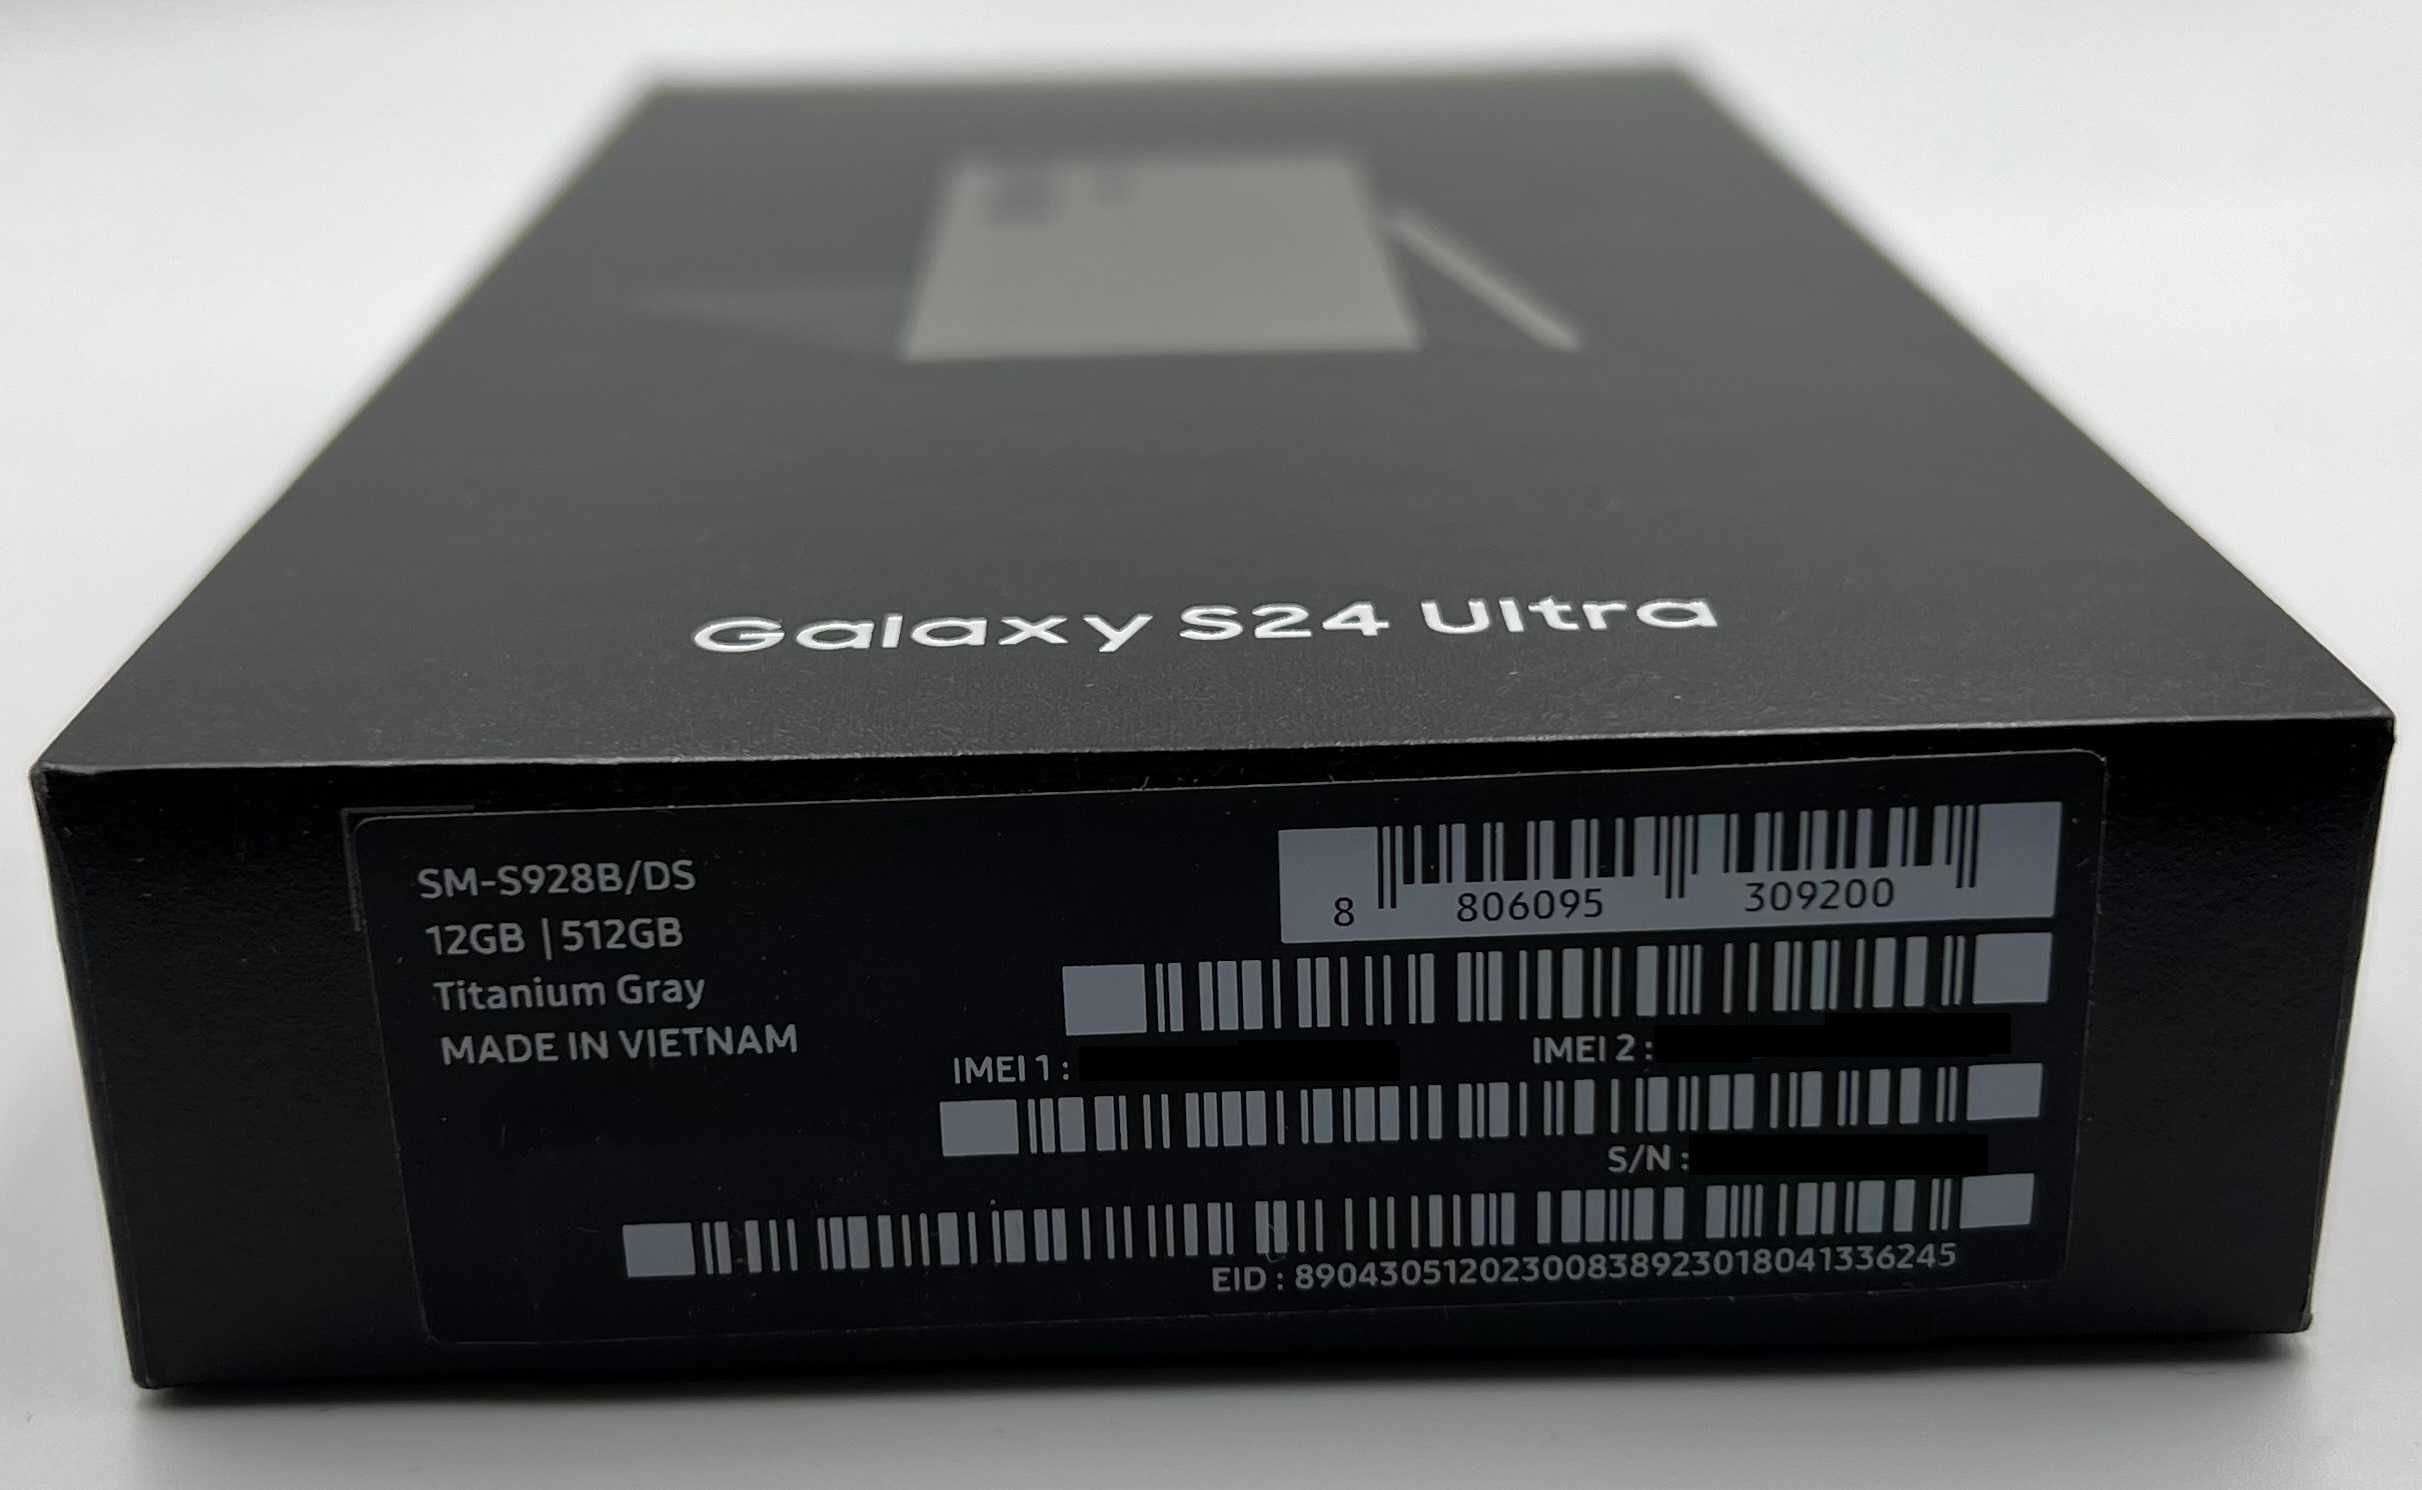 Samsung S24 Ultra 12/512GB Kolory Kraków ul.krakowska 4 SklepGSM